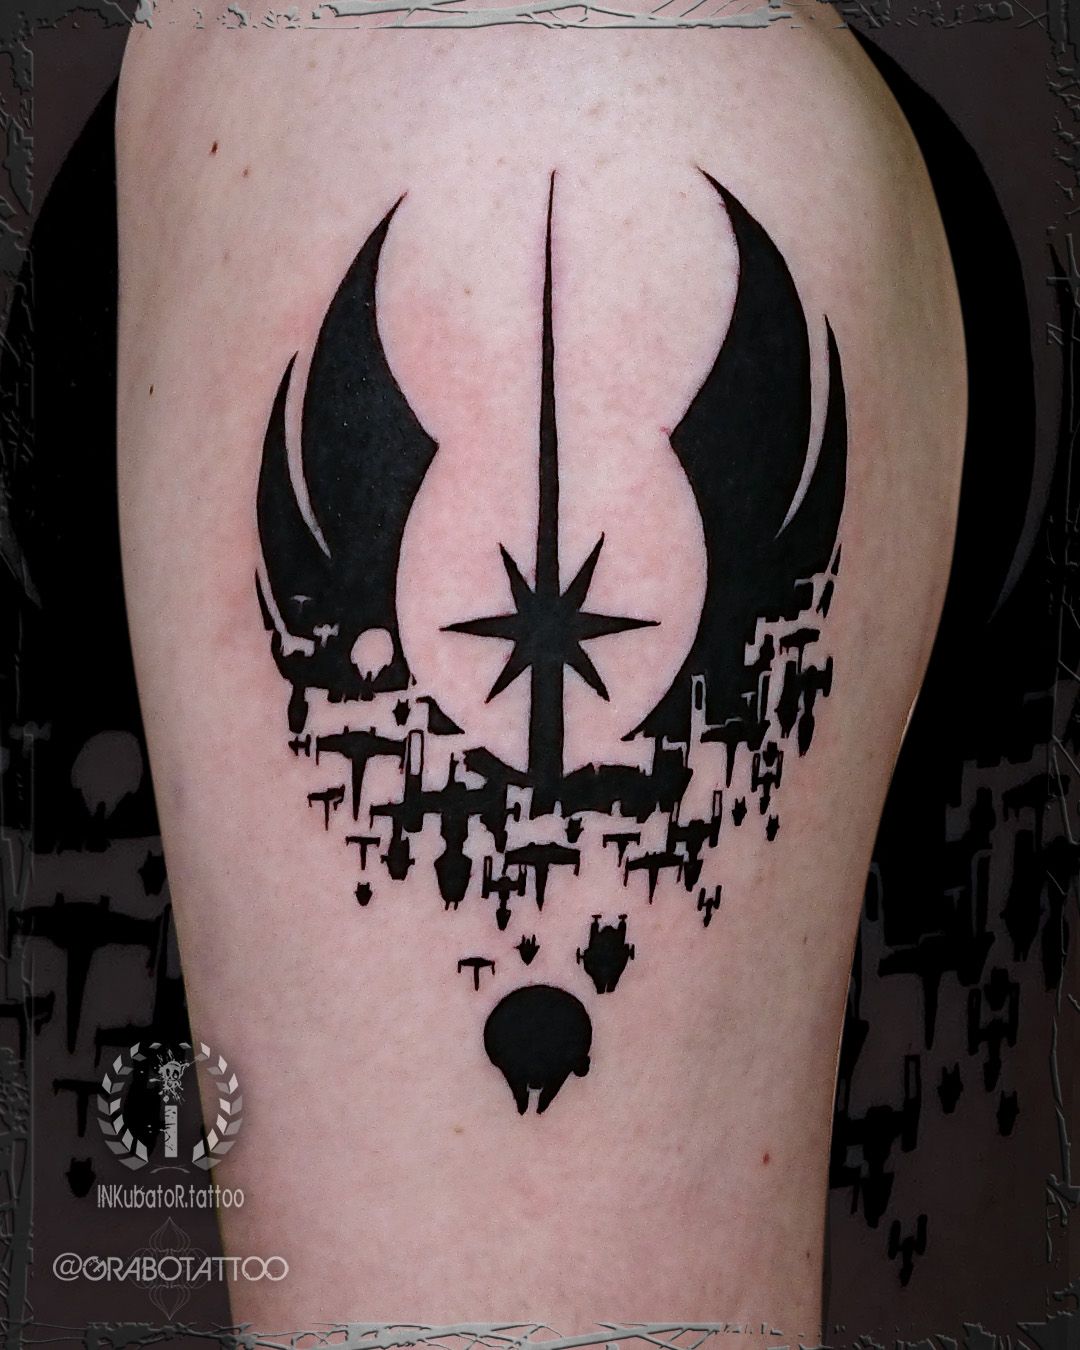 Julie Villeneuve Tattoo  Sketchy interpretation of the Jedi OrderLogo  Thank you for your trust ke4nu  𝔏𝔬𝔠𝔞𝔱𝔦𝔬𝔫  𝔇𝔬𝔯𝔱𝔪𝔲𝔫𝔡 𝔊𝔢𝔯𝔪𝔞𝔫𝔶 ℜ𝔢𝔰𝔦𝔡𝔢𝔫𝔱 𝔞𝔱 eigenarttattoo   tattooer tattooartist 